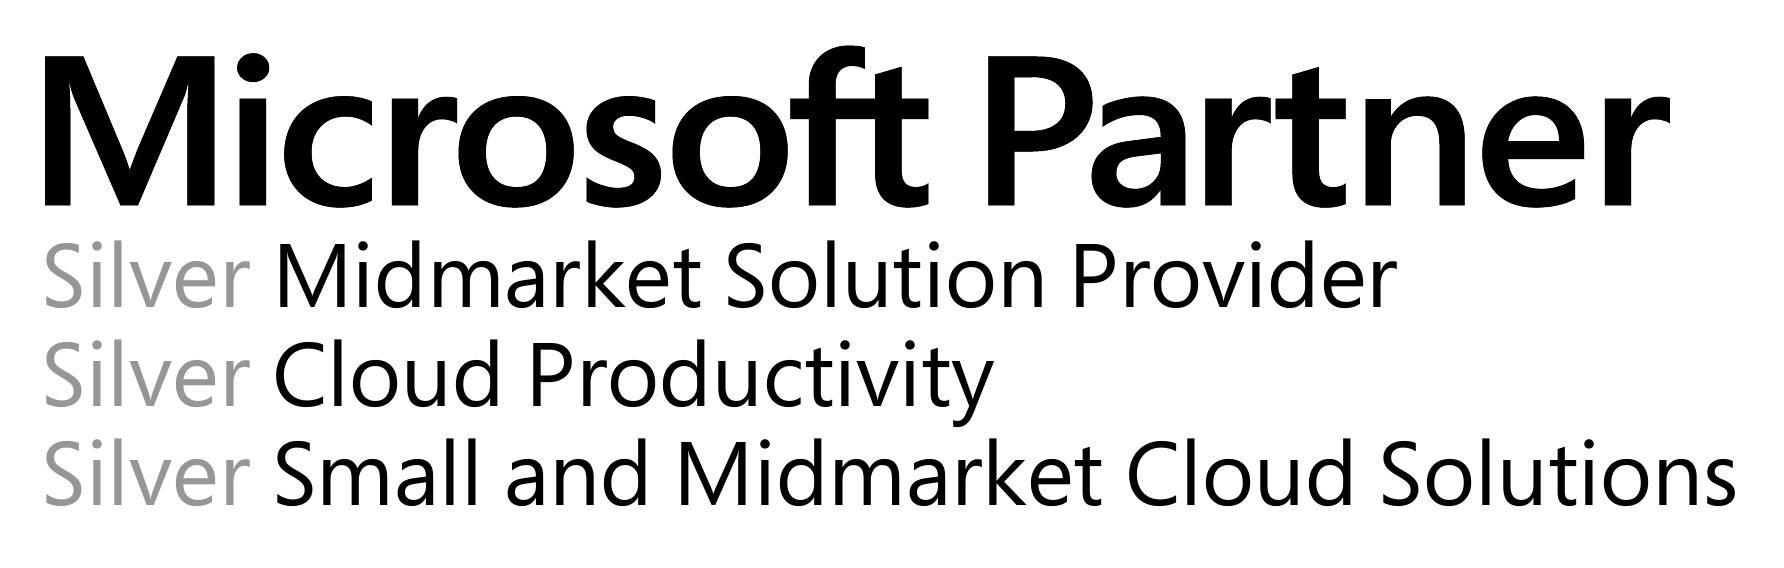 Msft Logo - Microsoft